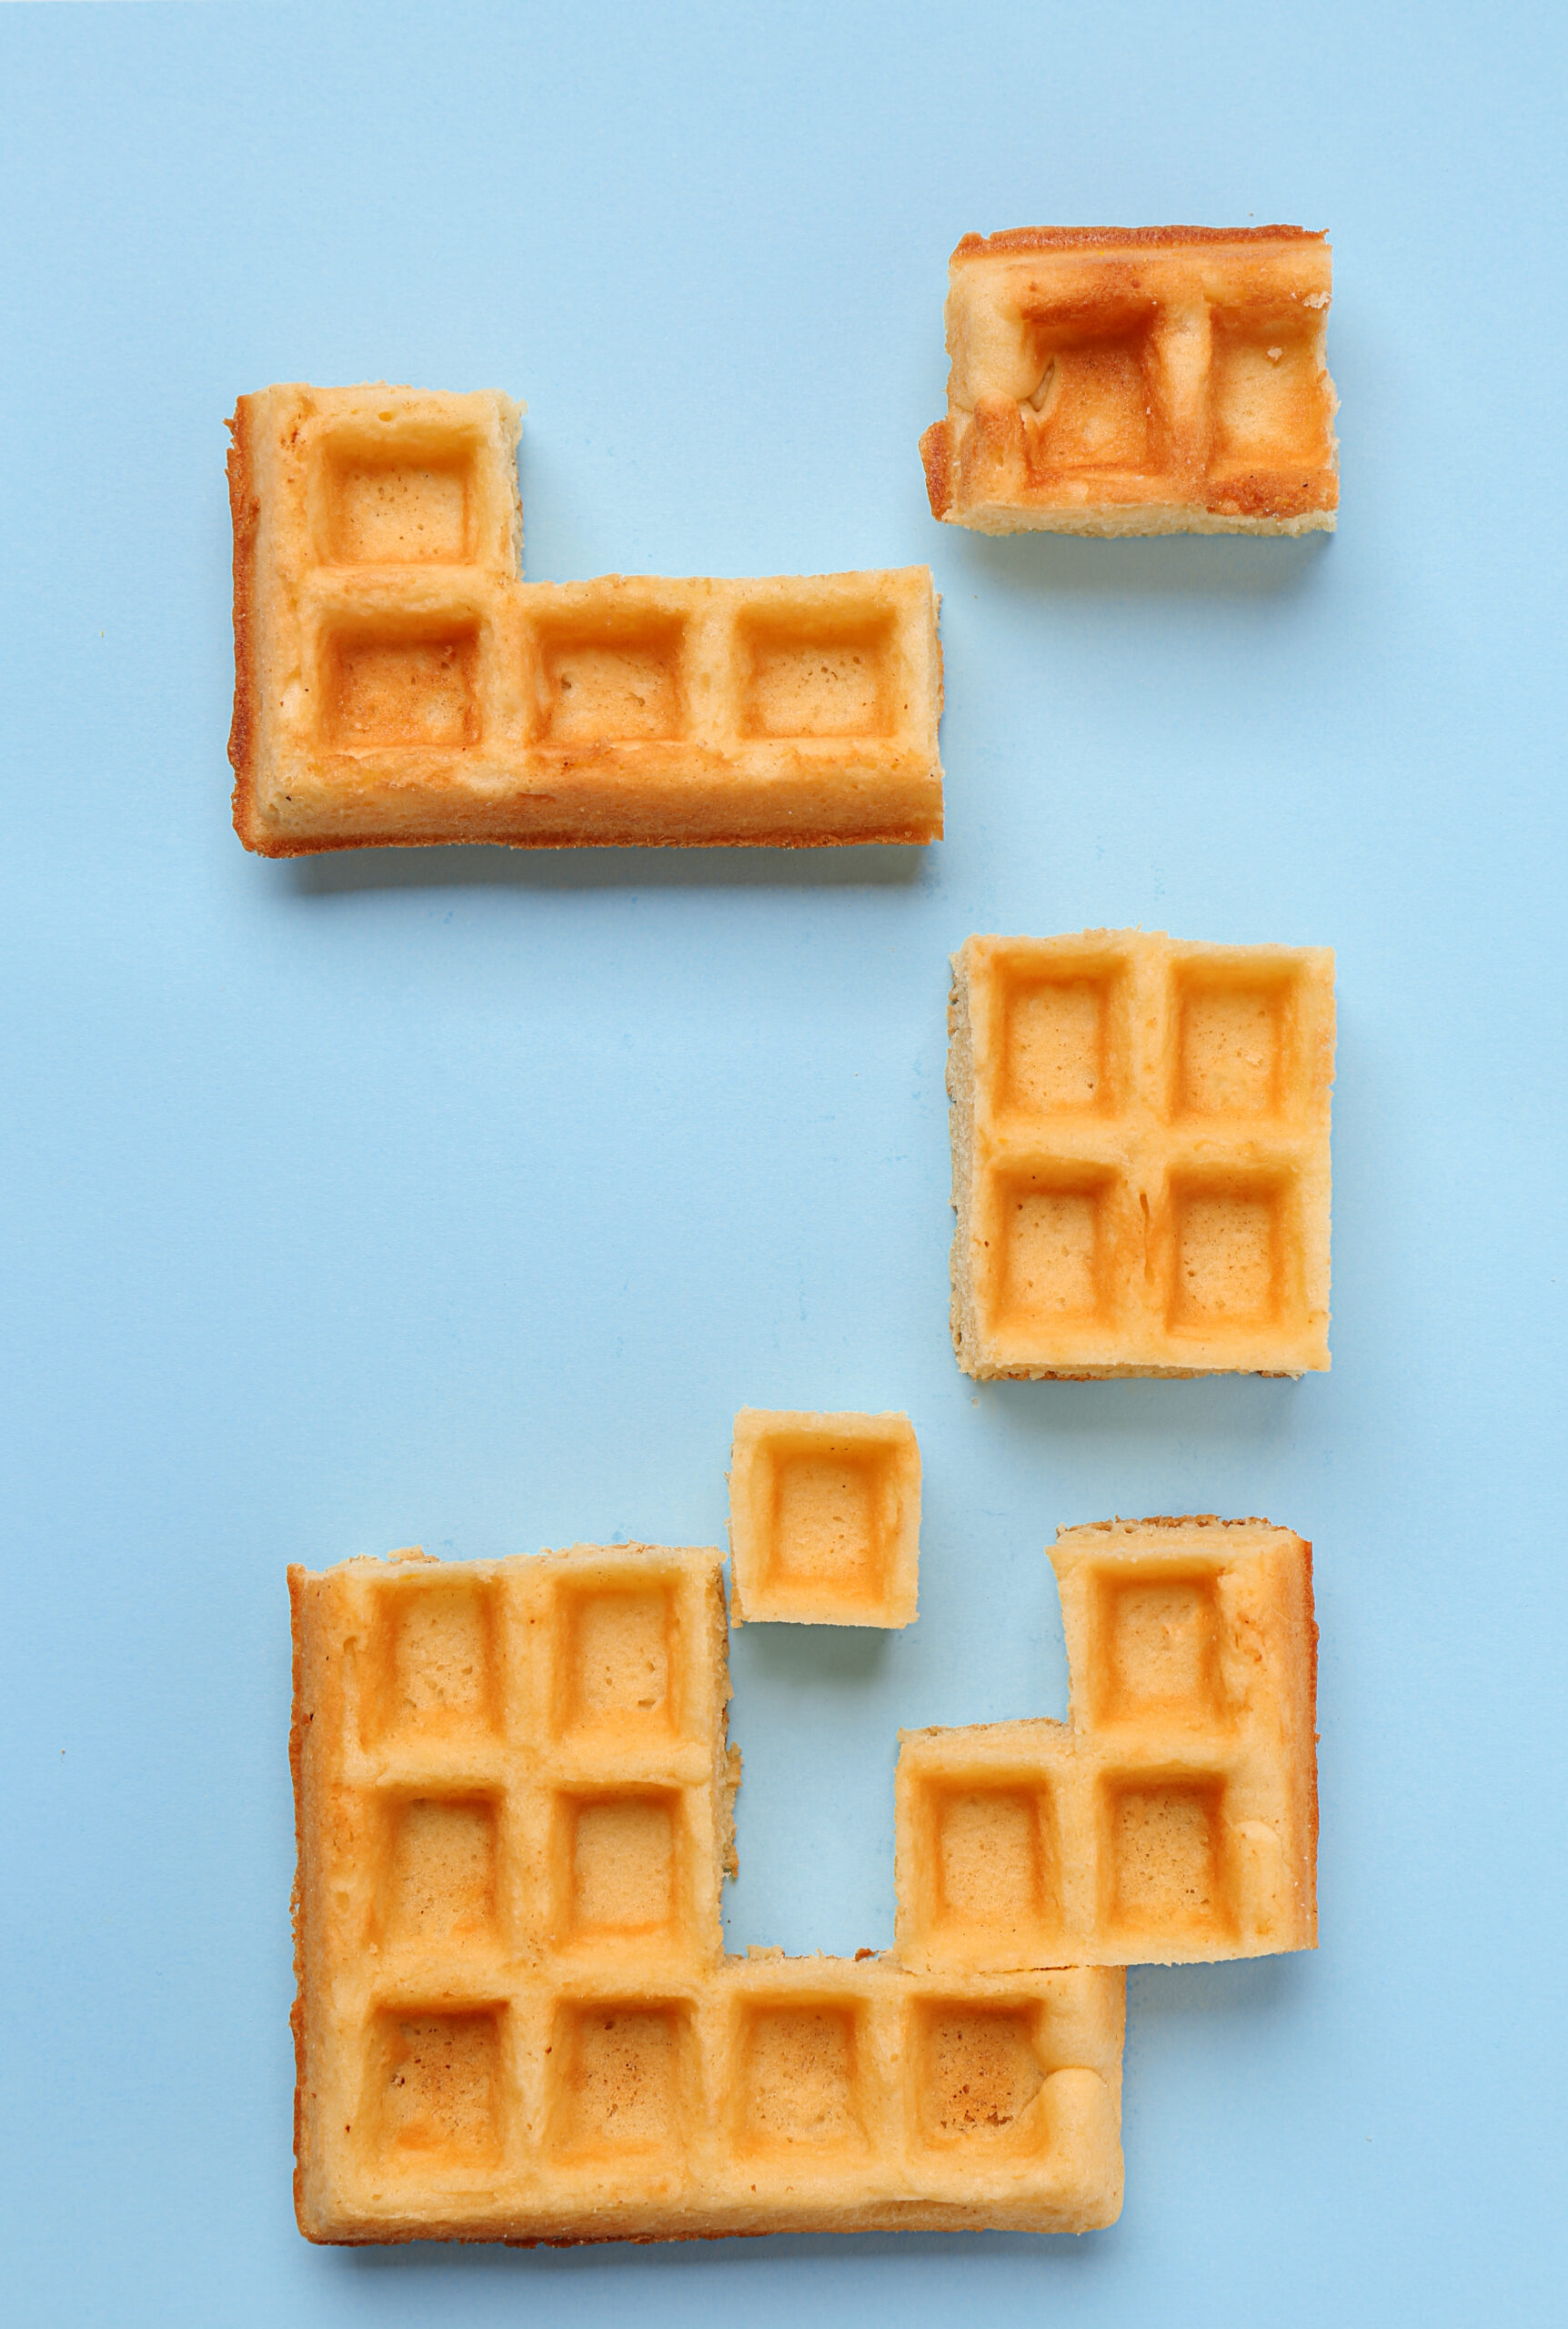 Decomposed waffles resembling tetris